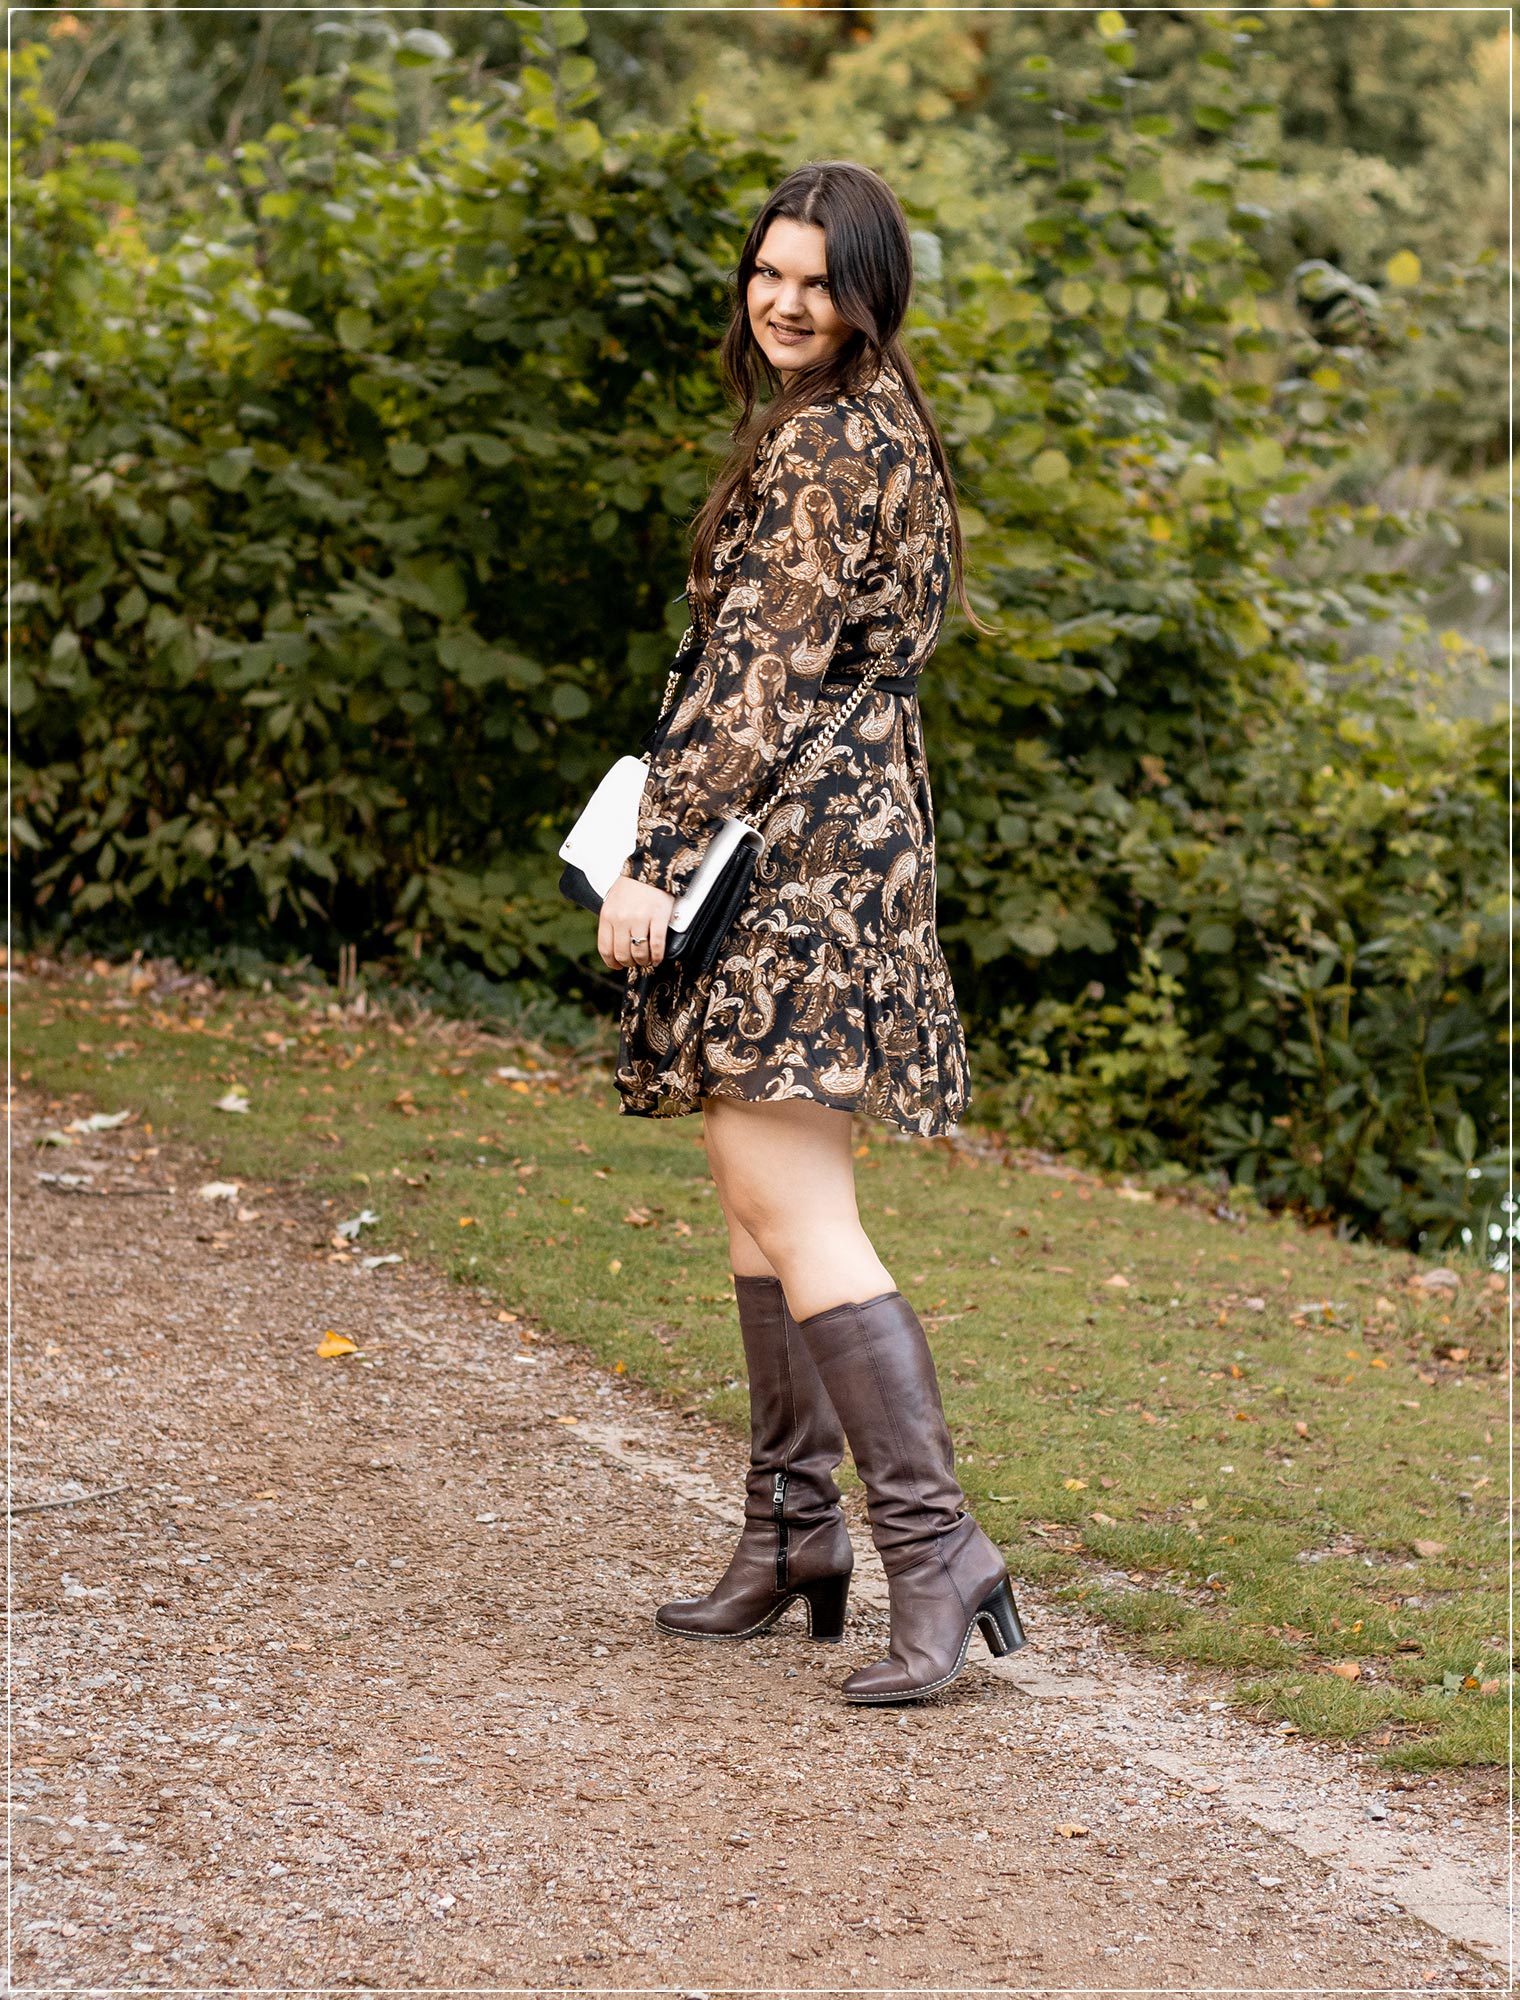 Paisley-Kleid im Herbst stylen